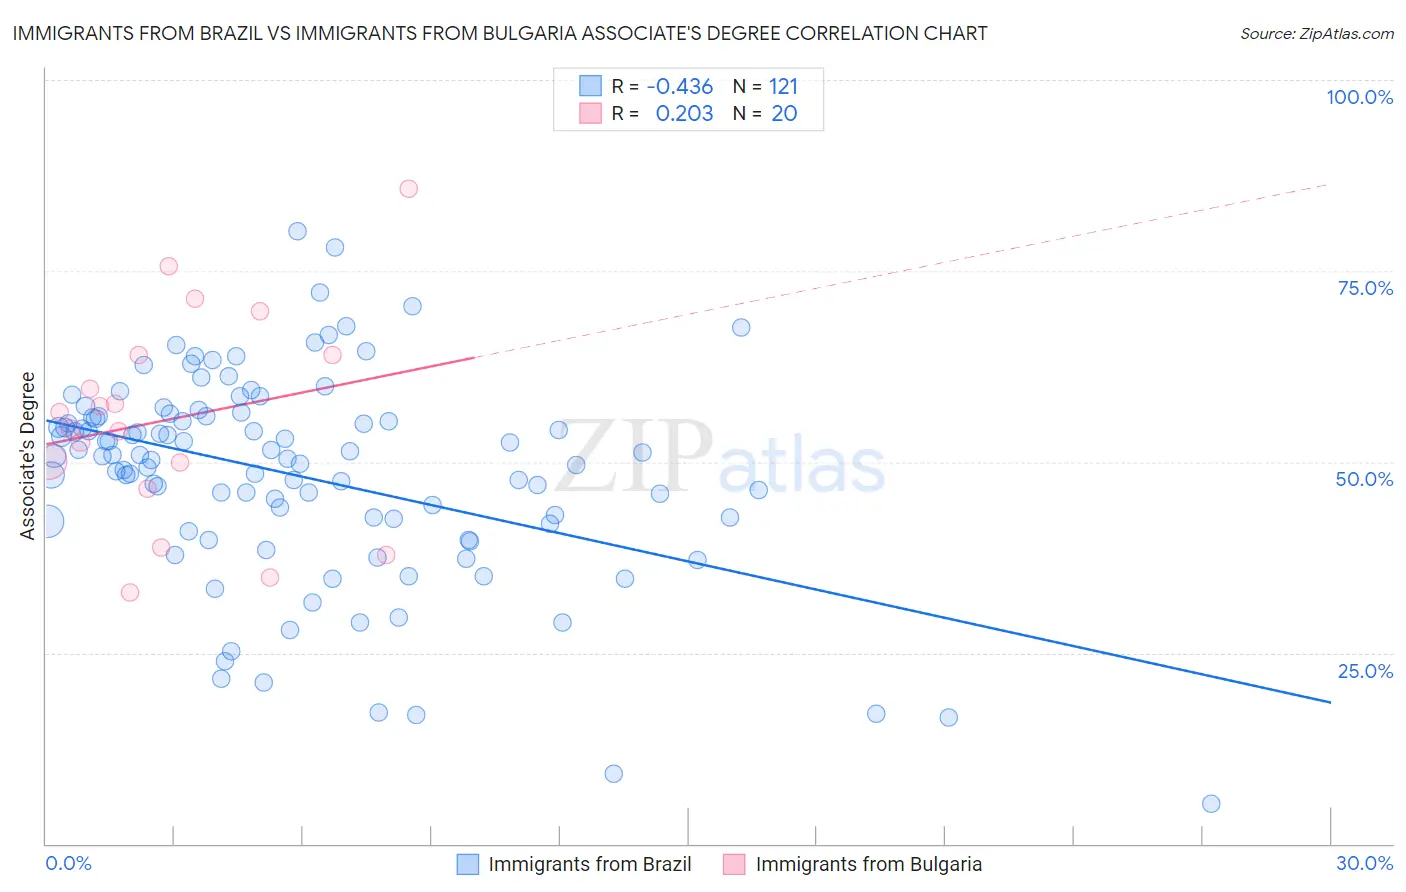 Immigrants from Brazil vs Immigrants from Bulgaria Associate's Degree